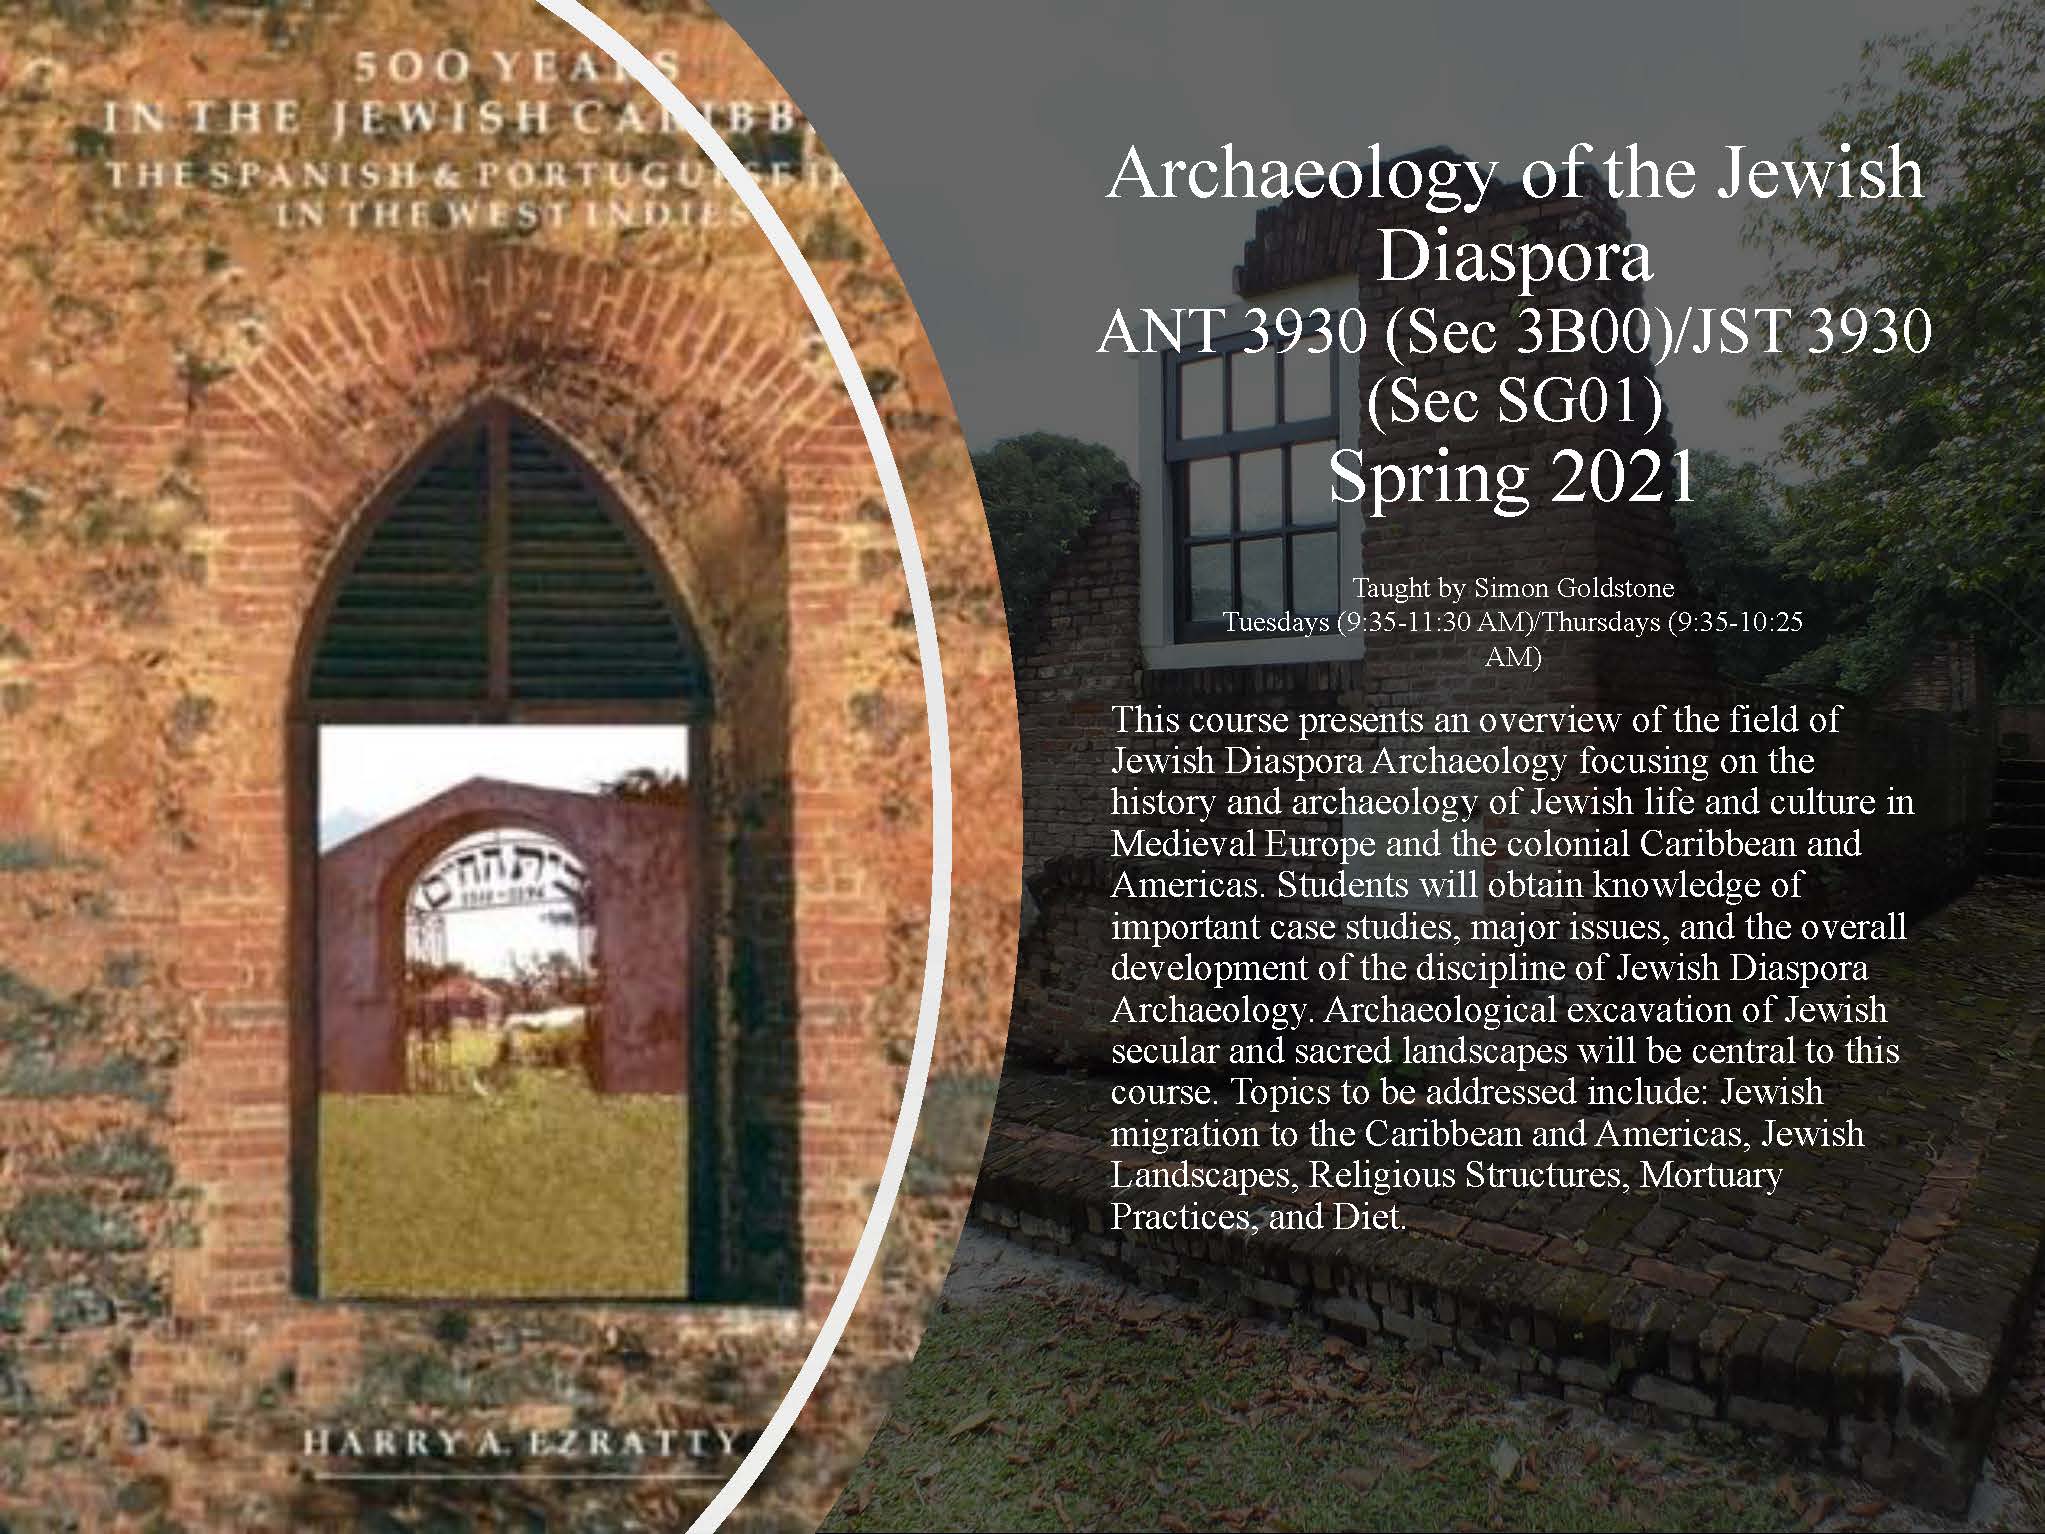 Arch of Jewish Diaspora flyer